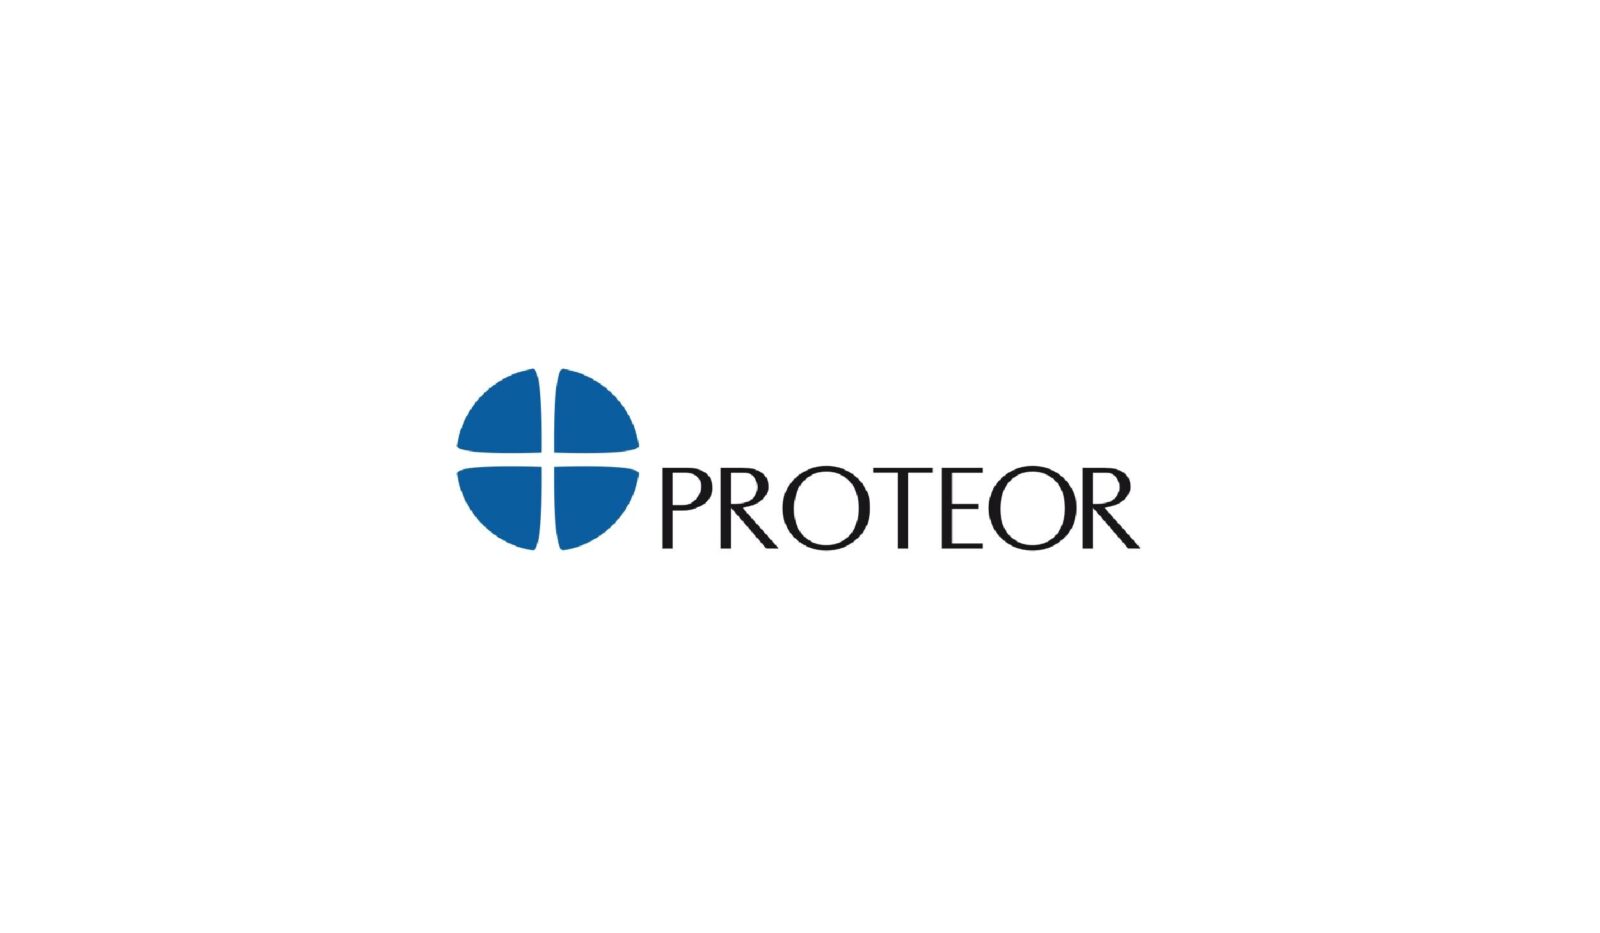 https://www.ccifrance-allemagne.fr/wp-content/uploads/2021/06/proteor-logo-scaled.jpg